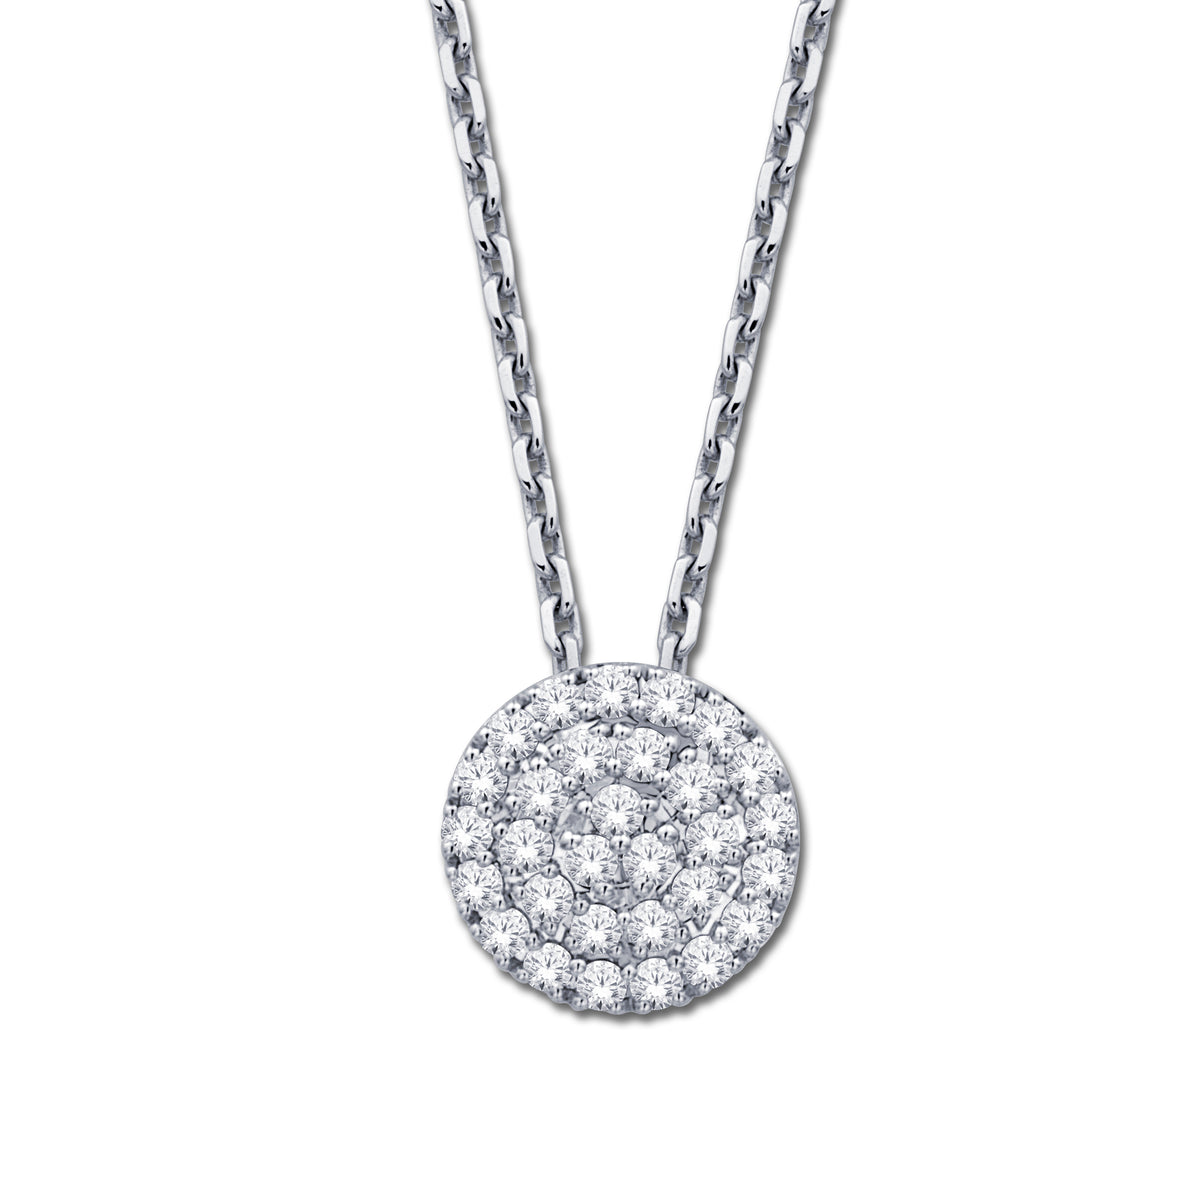 14K White Gold 0.26ct. Diamond Cluster Fashion Necklace